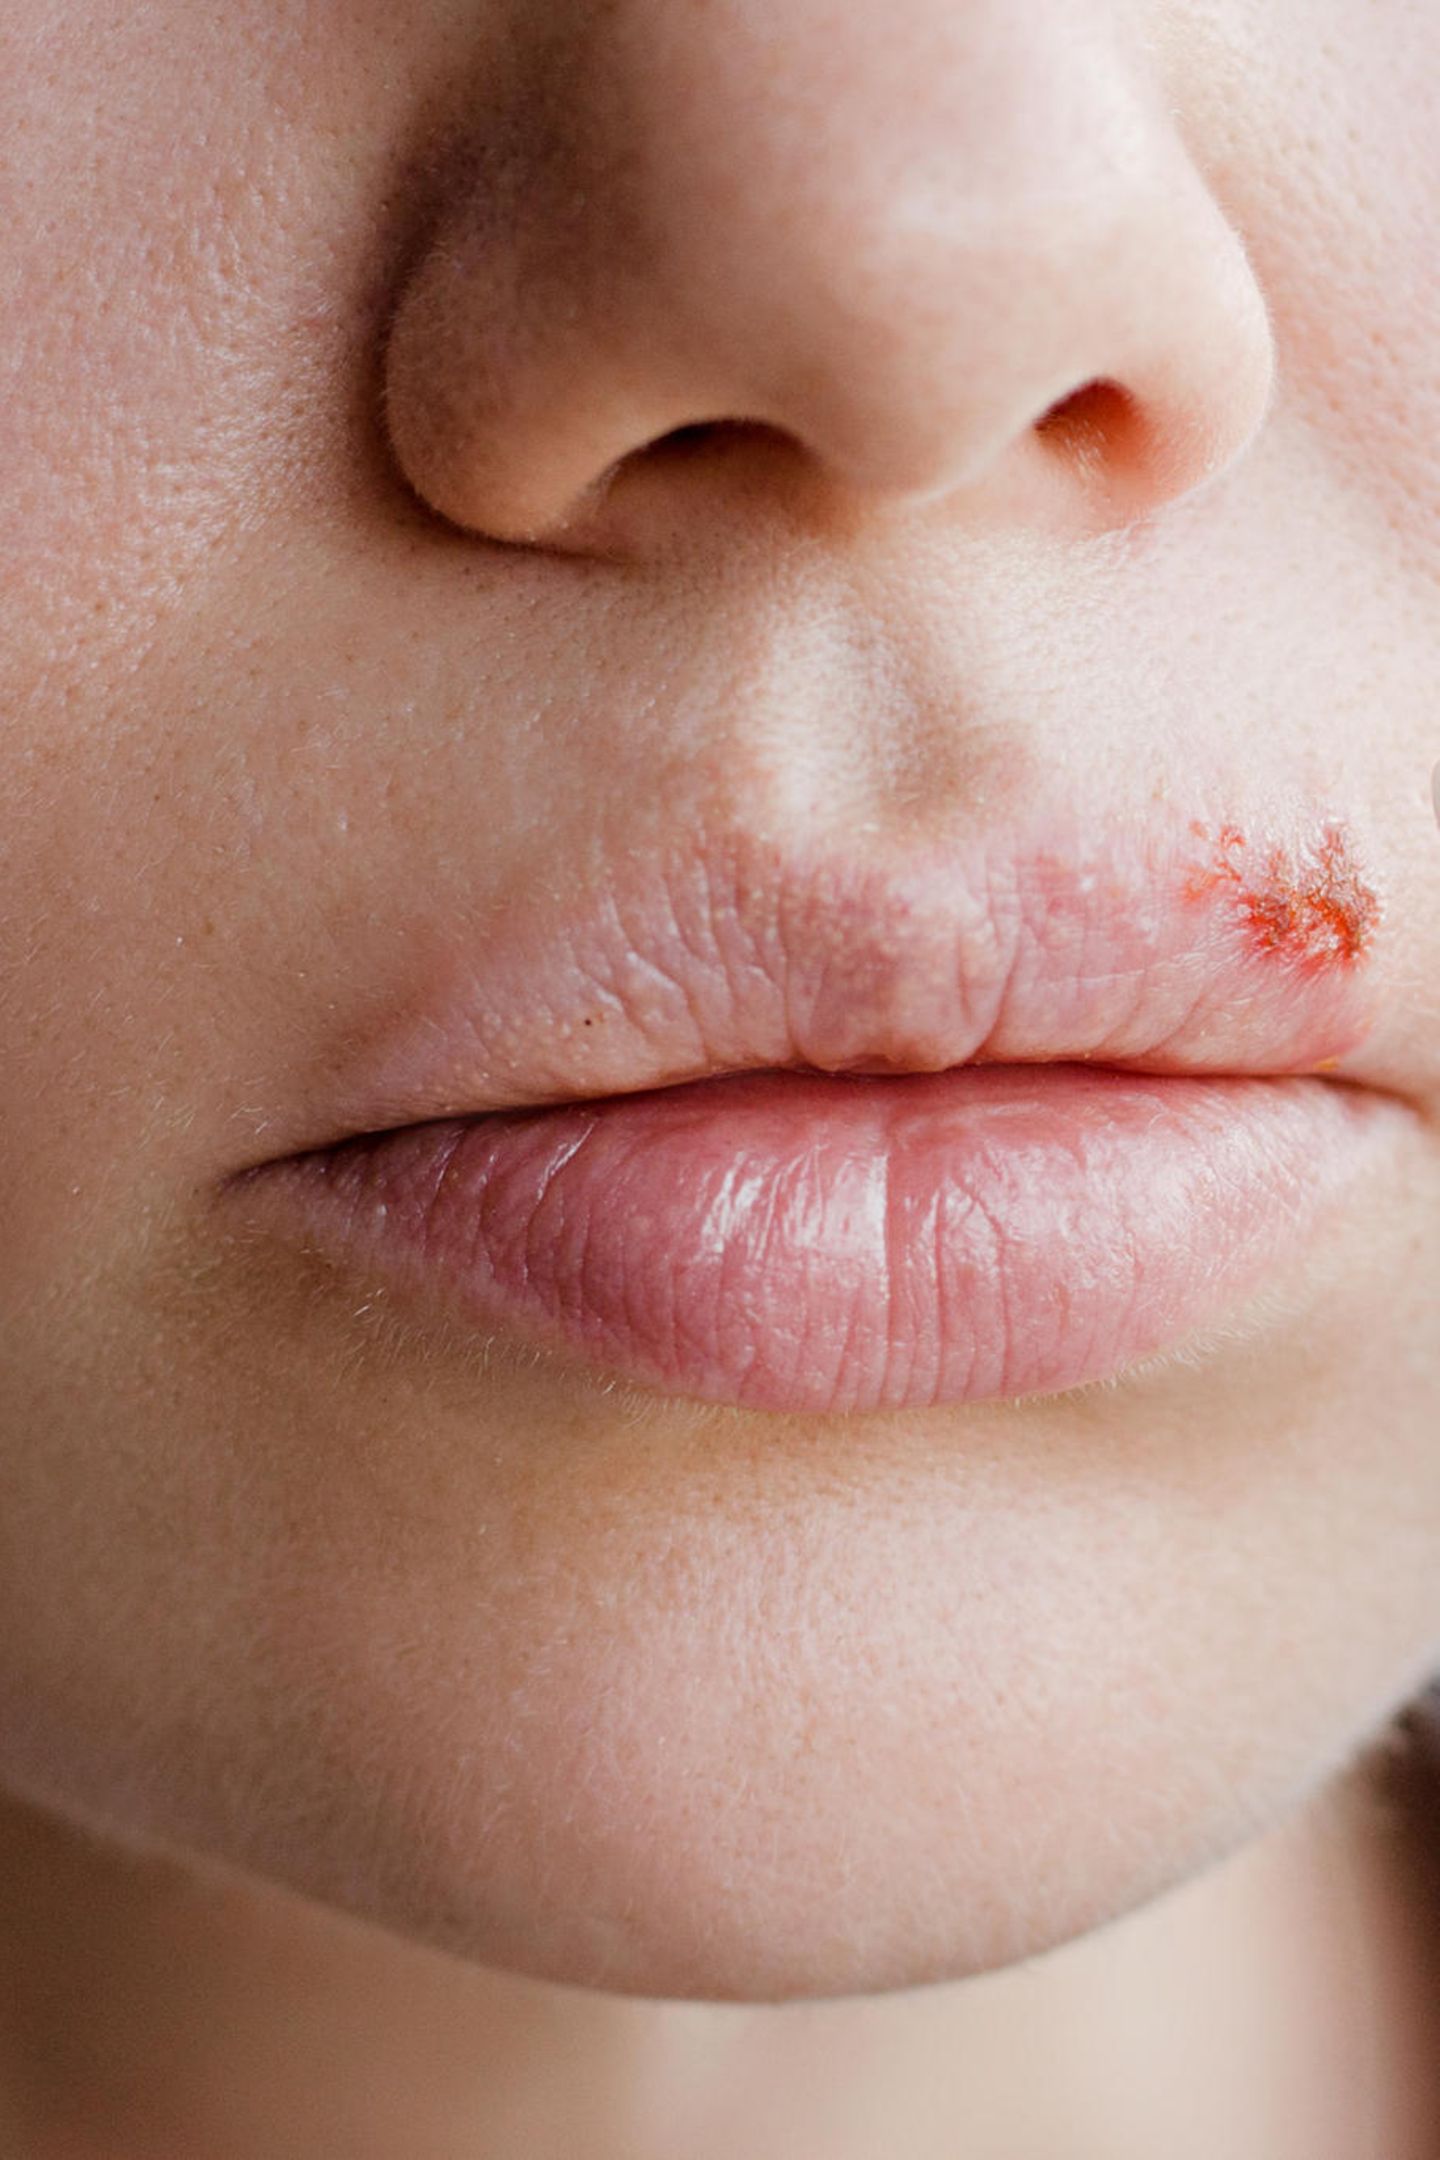 Herpes küssen trotz Herpes: Das